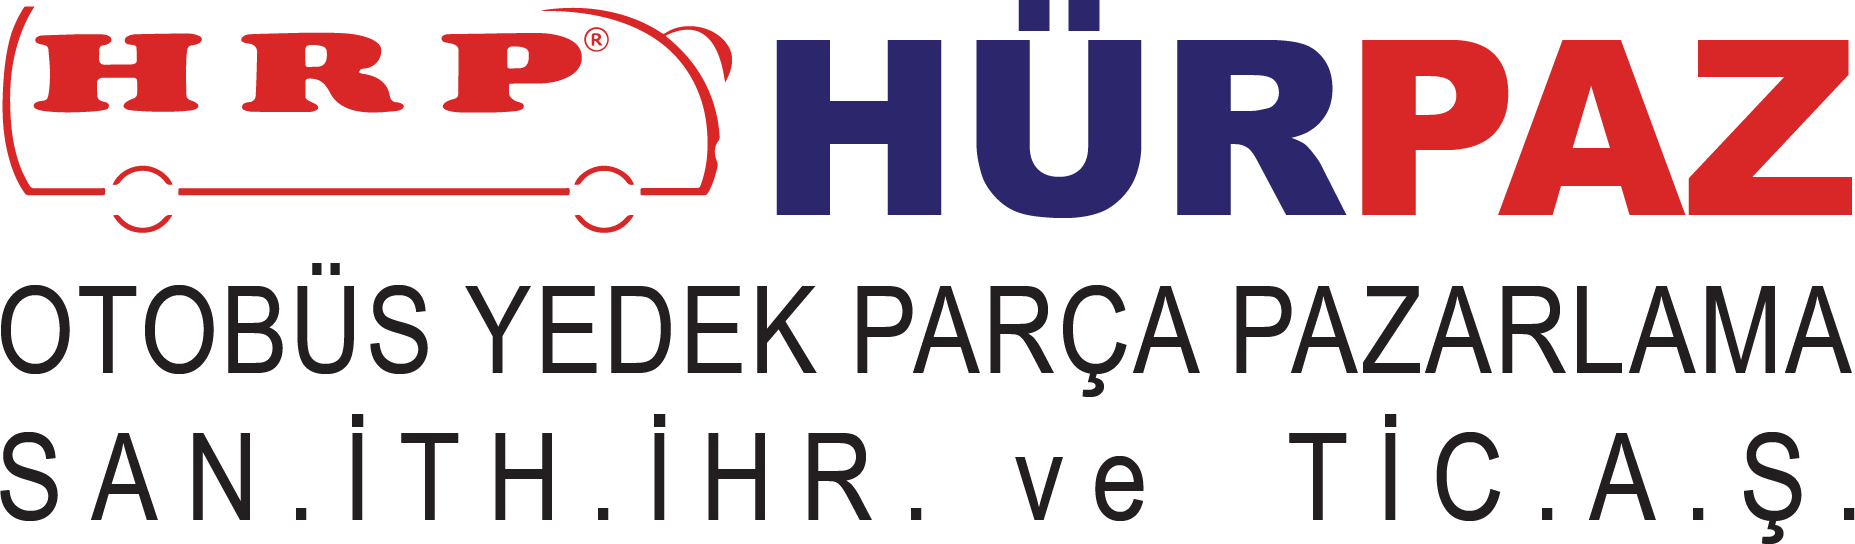 Hürpaz logo